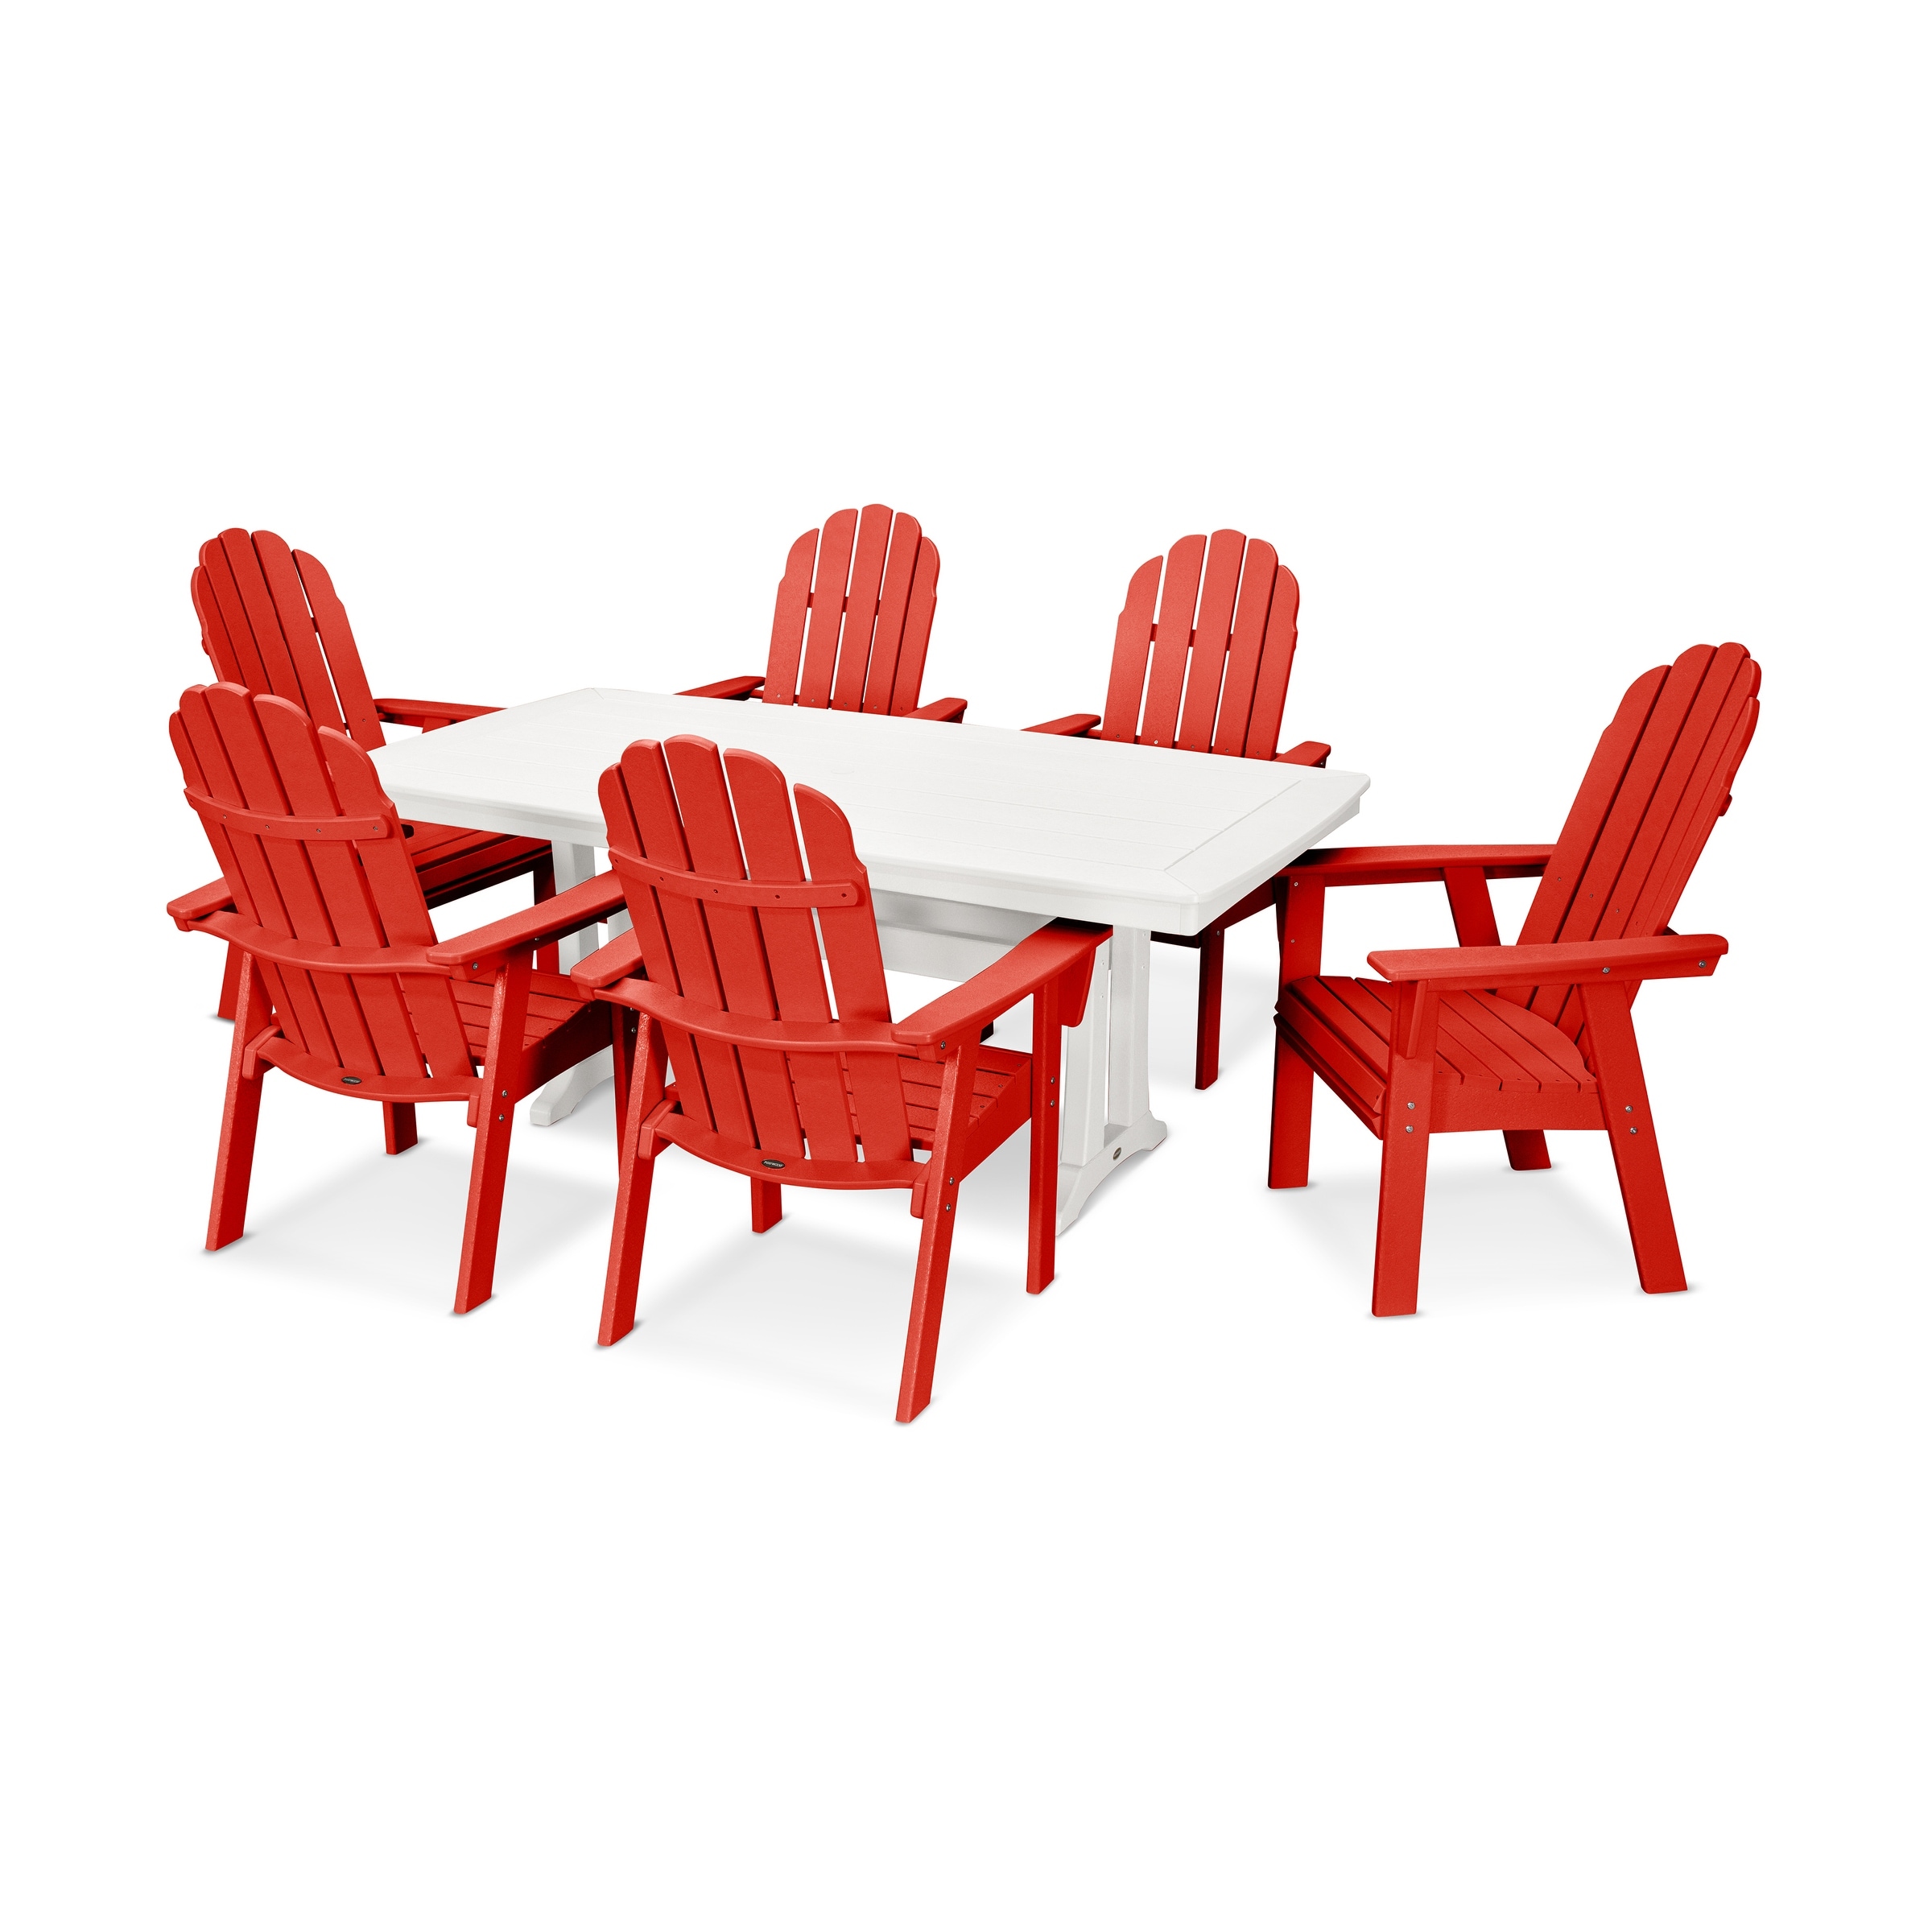 Polywood Vineyard Adirondack Chair 7-piece Nautical Trestle Dining Set